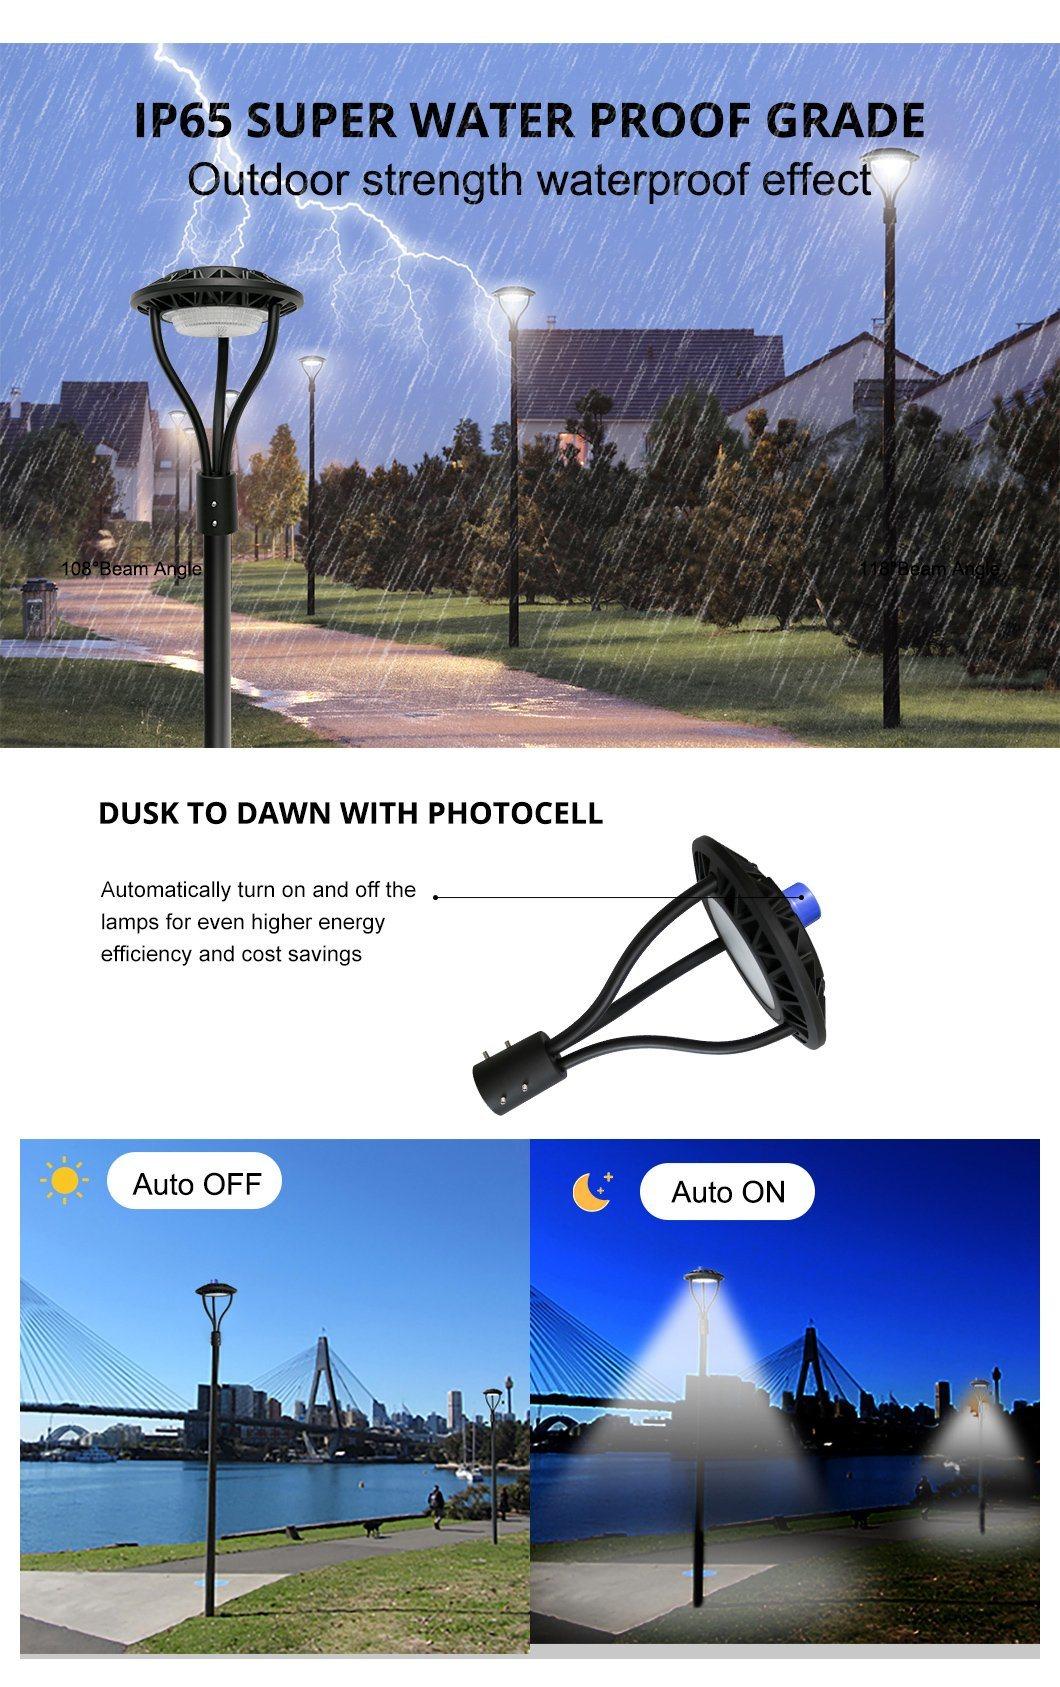 OEM IP65 Waterproof LED Light Garden Lamp Manufacturer Post Top LED Outdoor Garden Light 60W 100W 50W 130lm/W Photosell Sensor